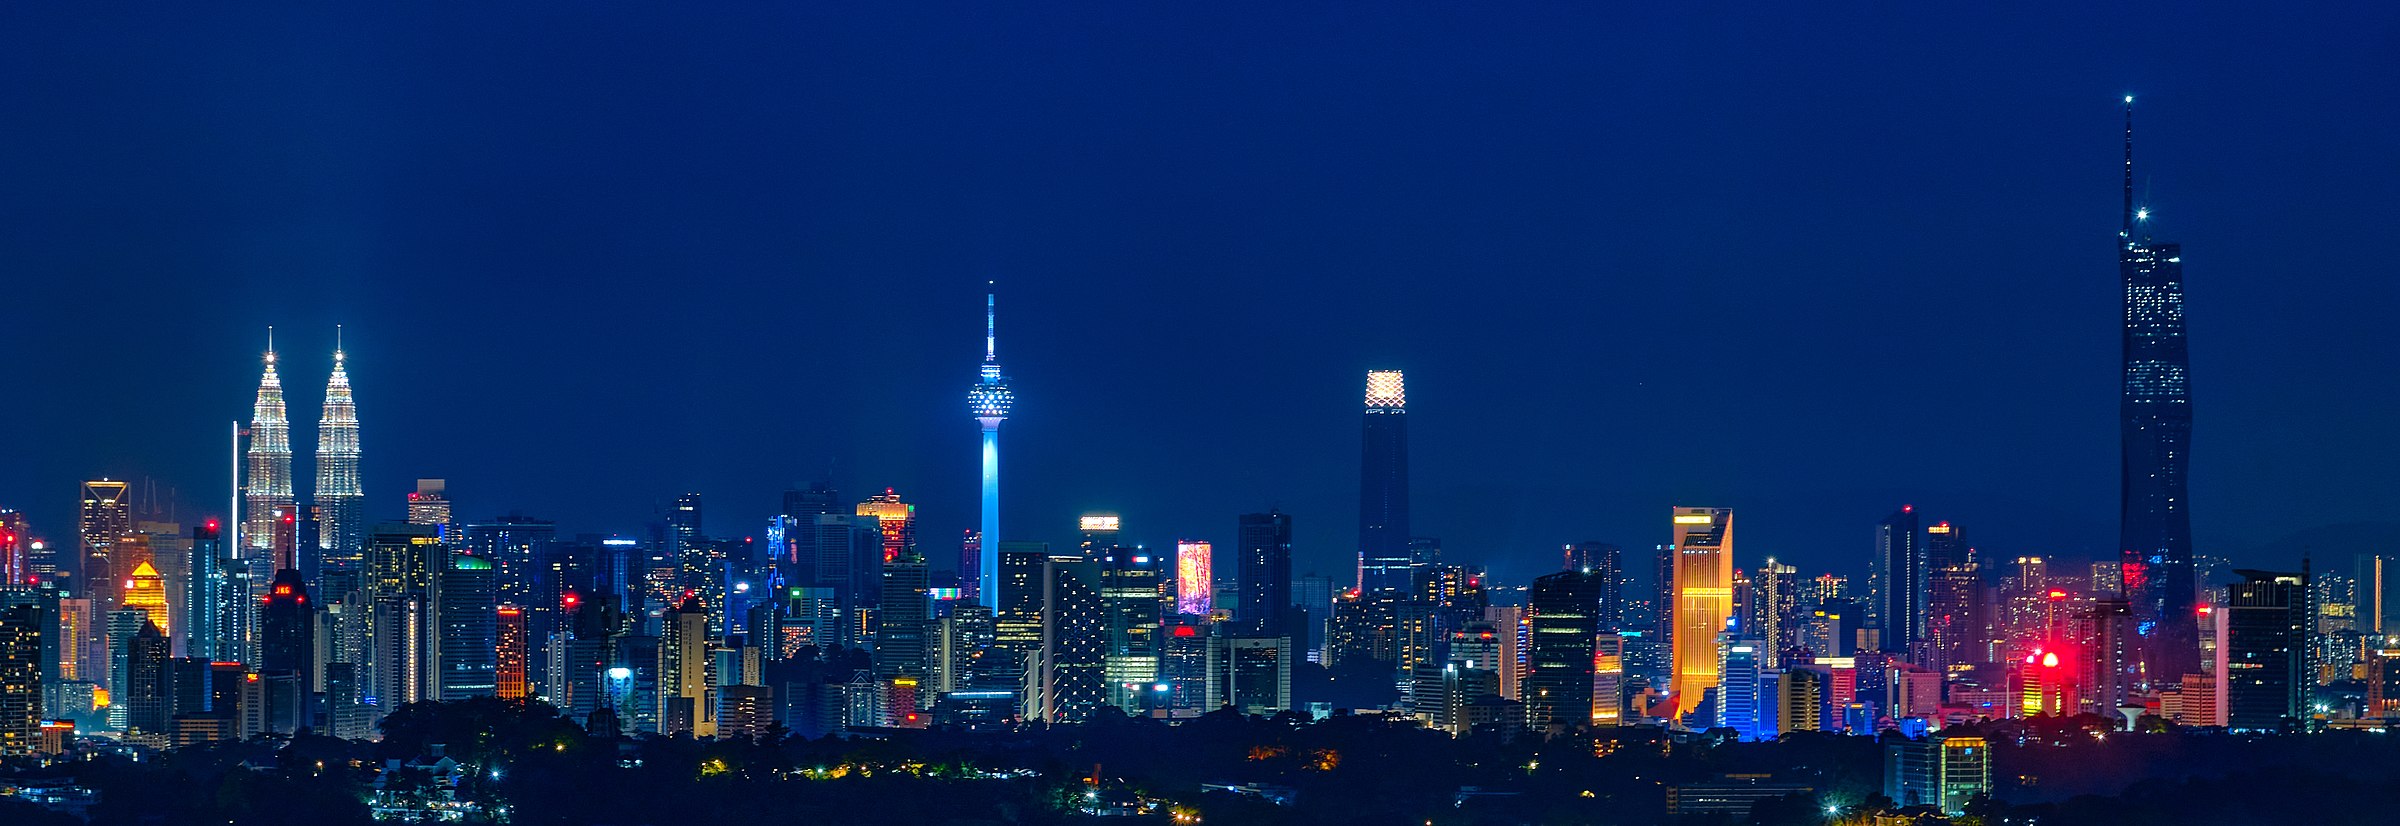 Skyline of Kuala Lumpur city center at night in 2022